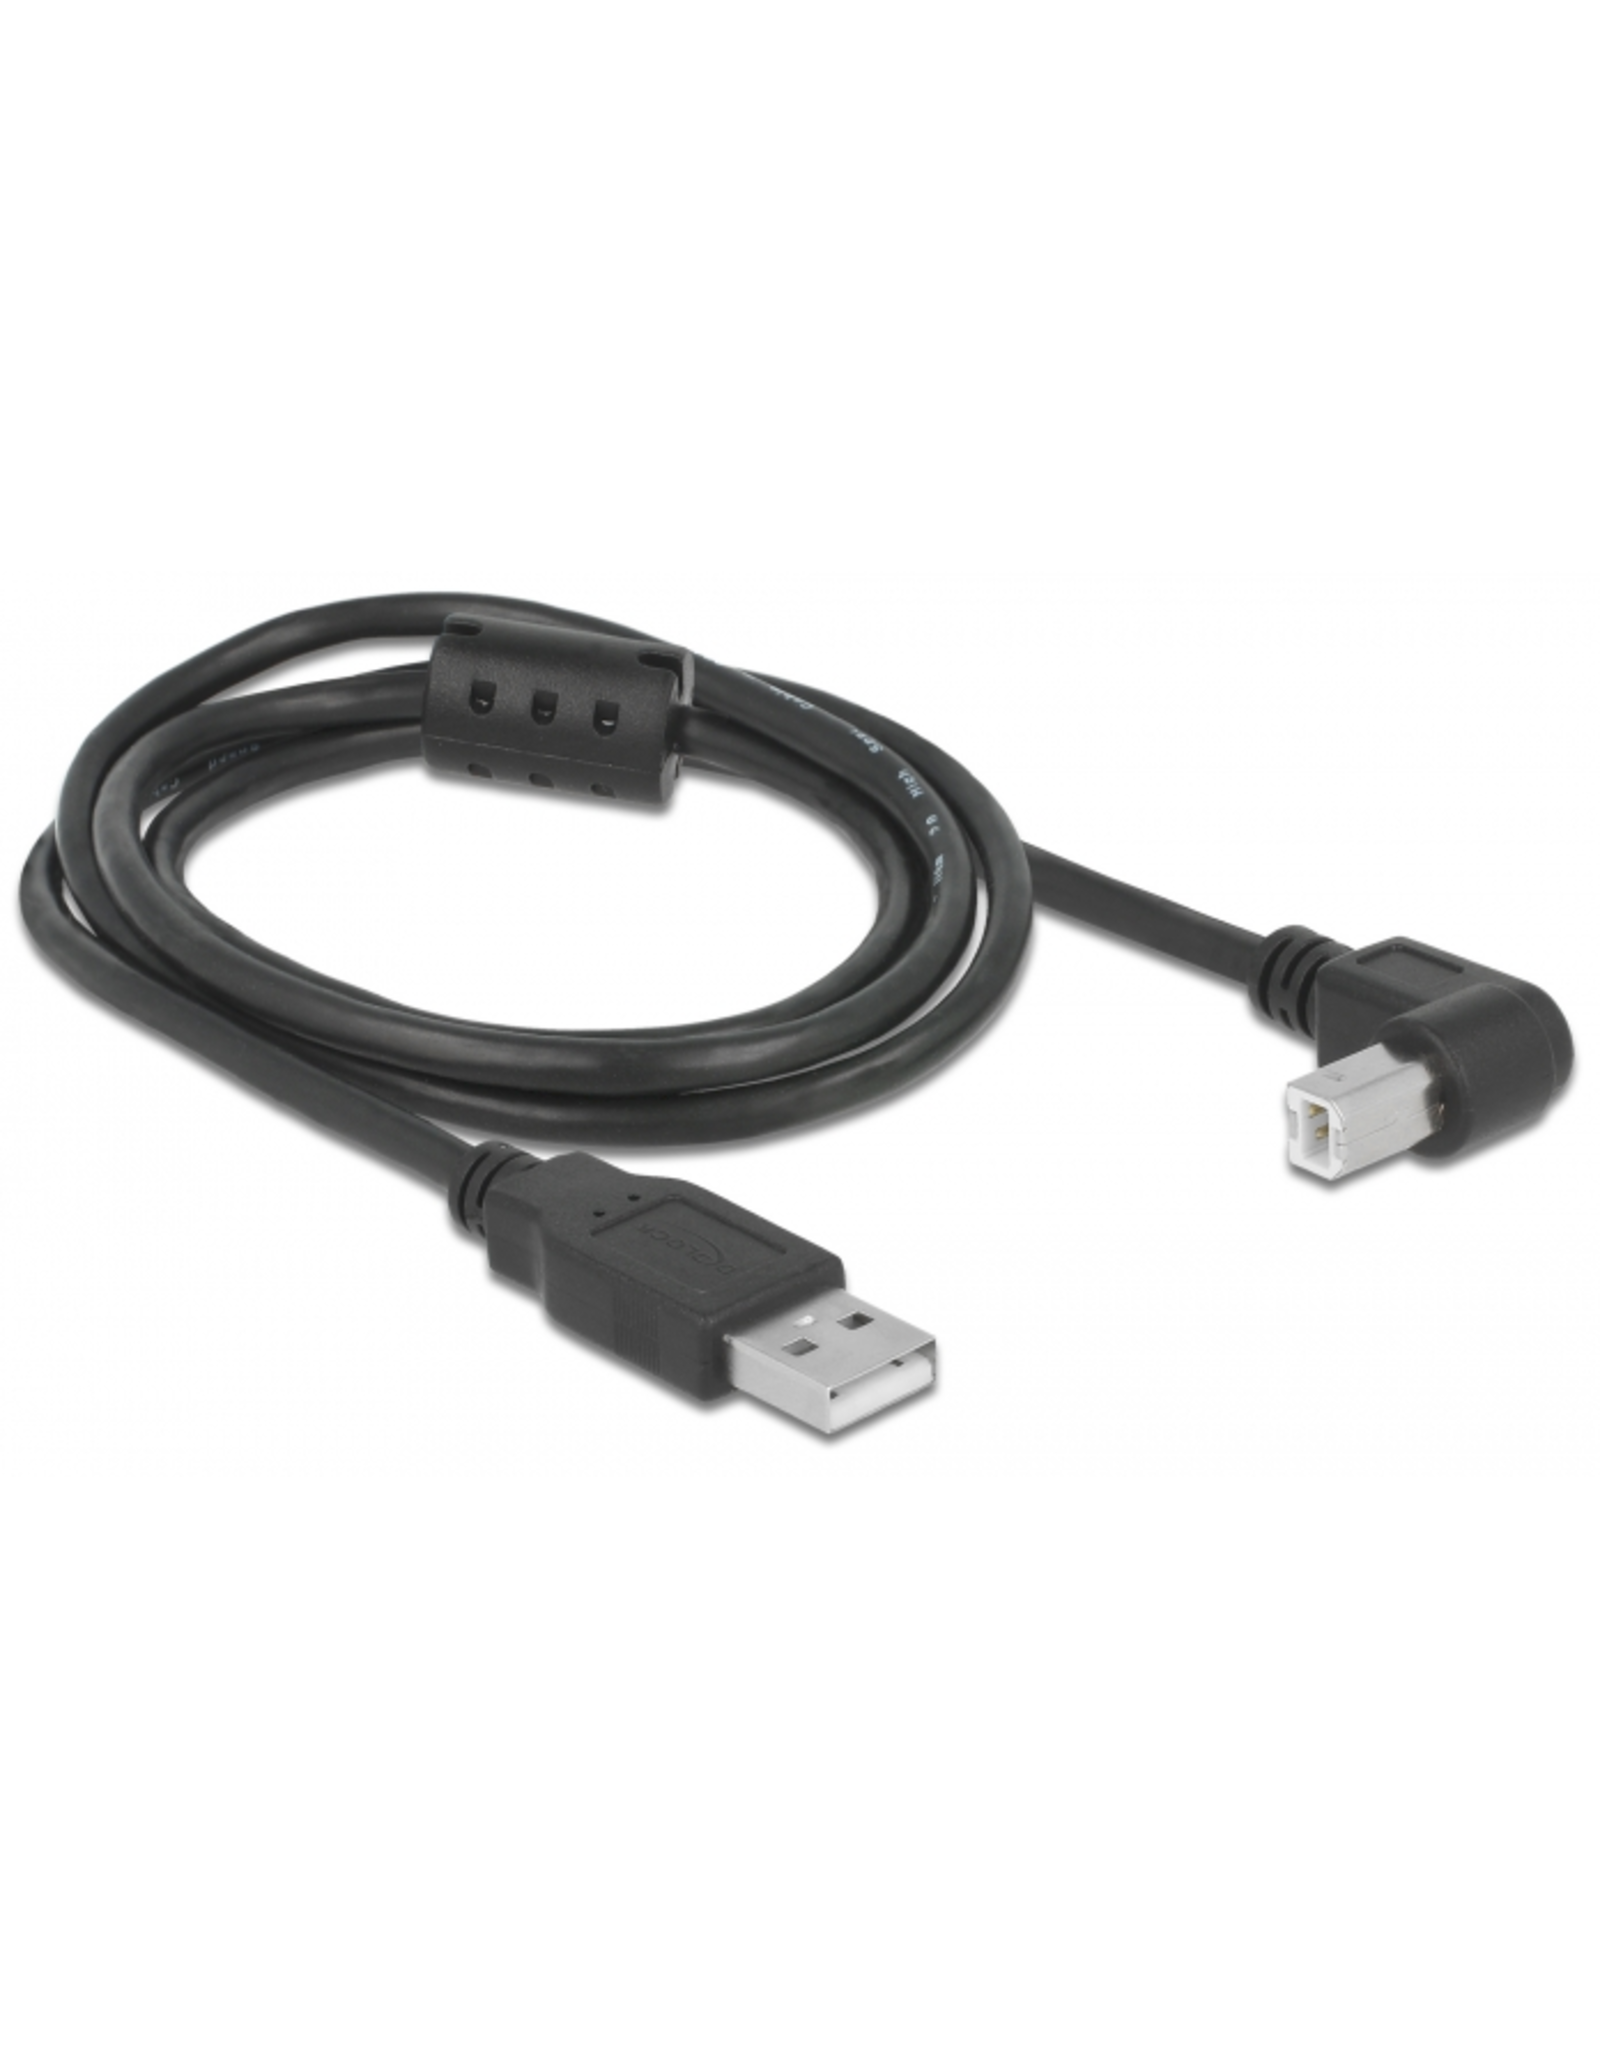 Pegasus Astro Pegasus Astro USB 2.0 Type-A male > USB 2.0 Type-B male angled 1 m black Premium USB Cable #USB2B-1M